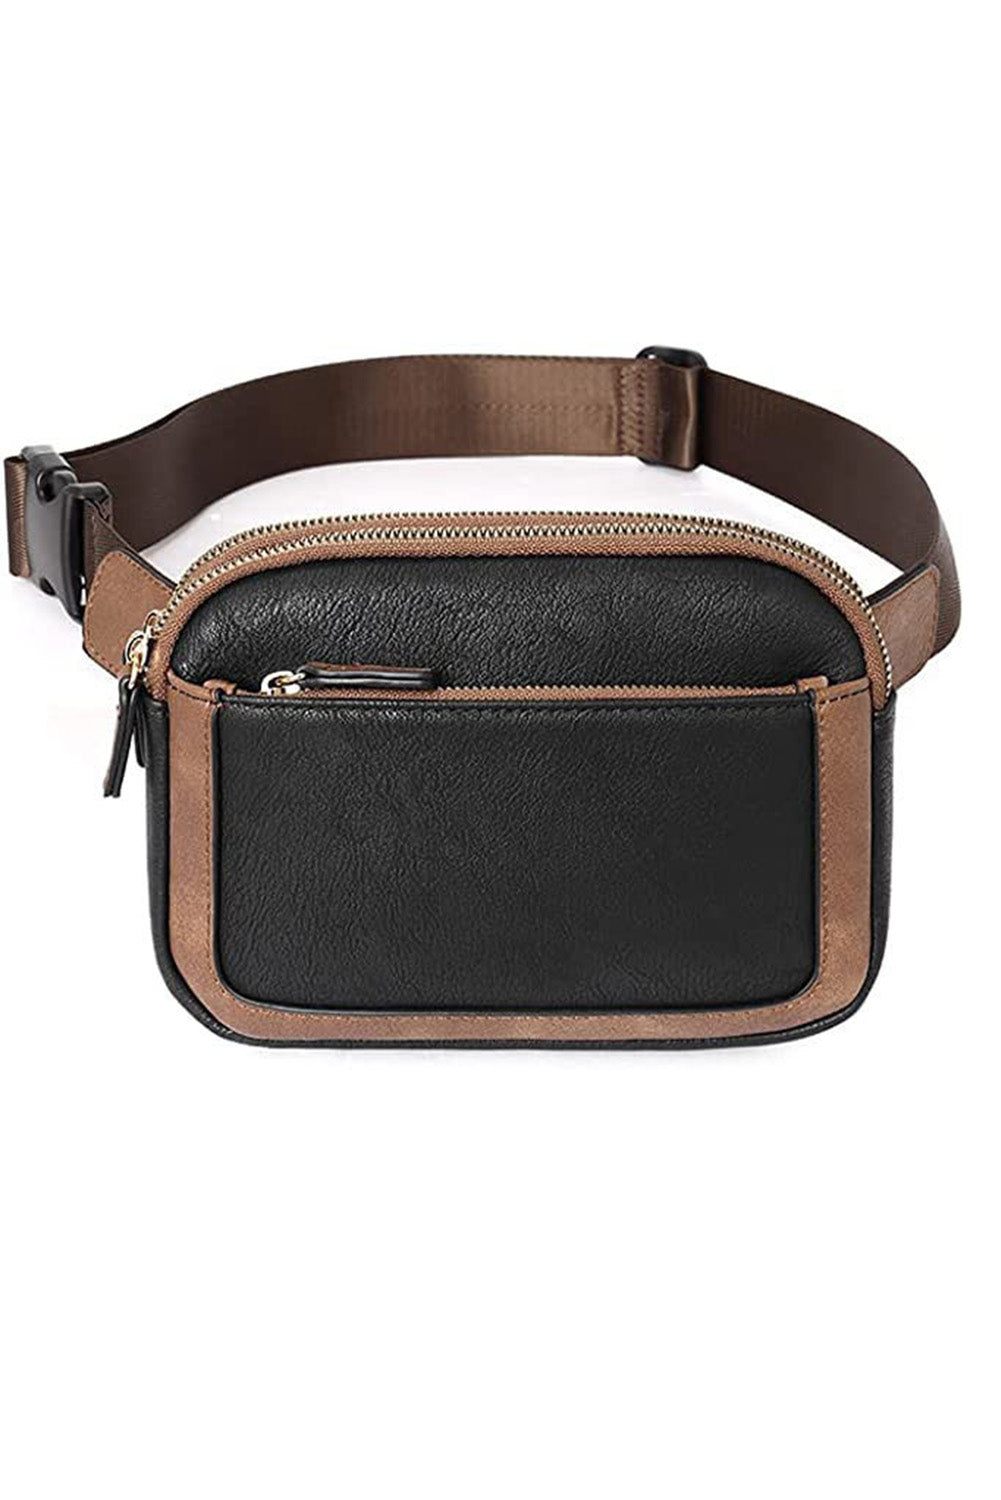 Cali Chic Black Adjustable Strap Mini PU Leather Crossbody Bag